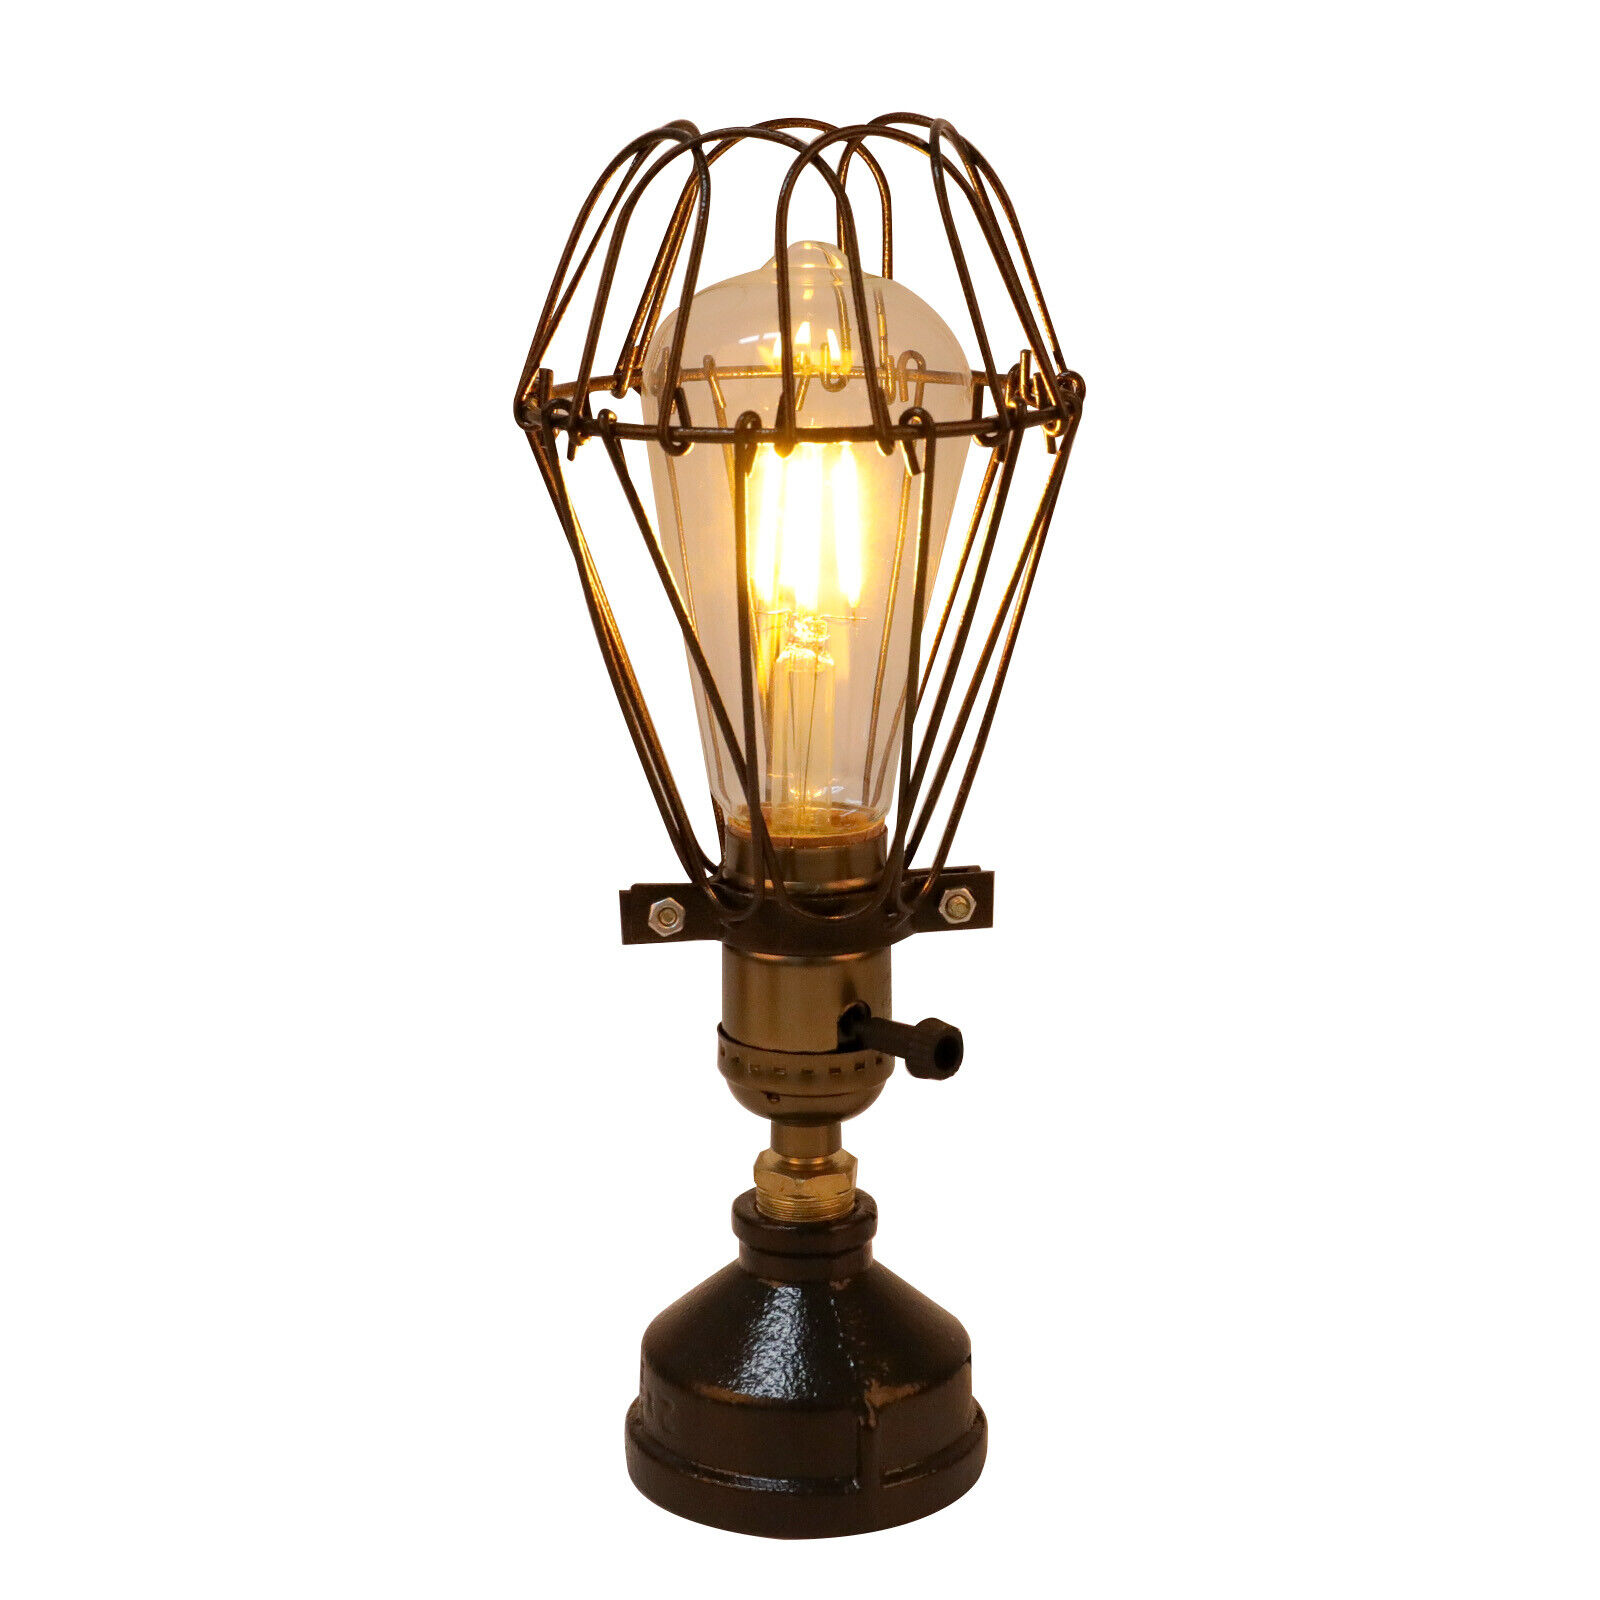 Rustic Industrial Edison Steampunk Lamps Water Pipe Desk Light Fixture w/ Switch